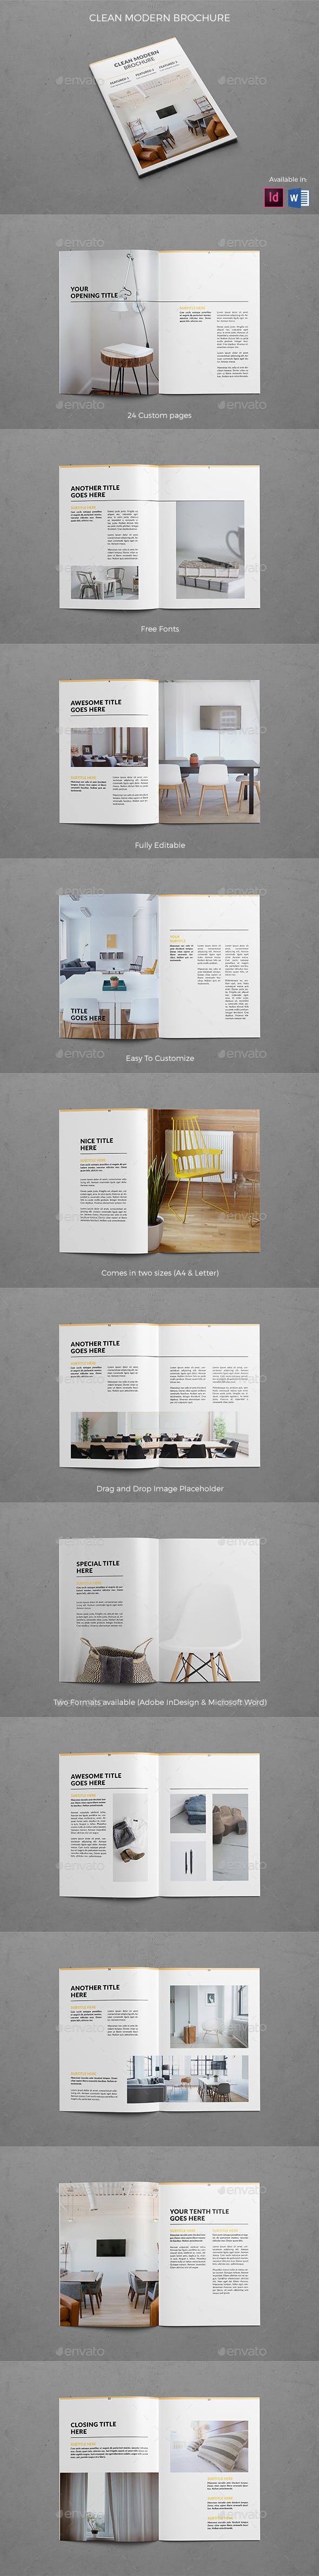 简约现代的家居创意公司介绍画册模板 Simple And Modern Home Creative Company Introduction Album Template插图